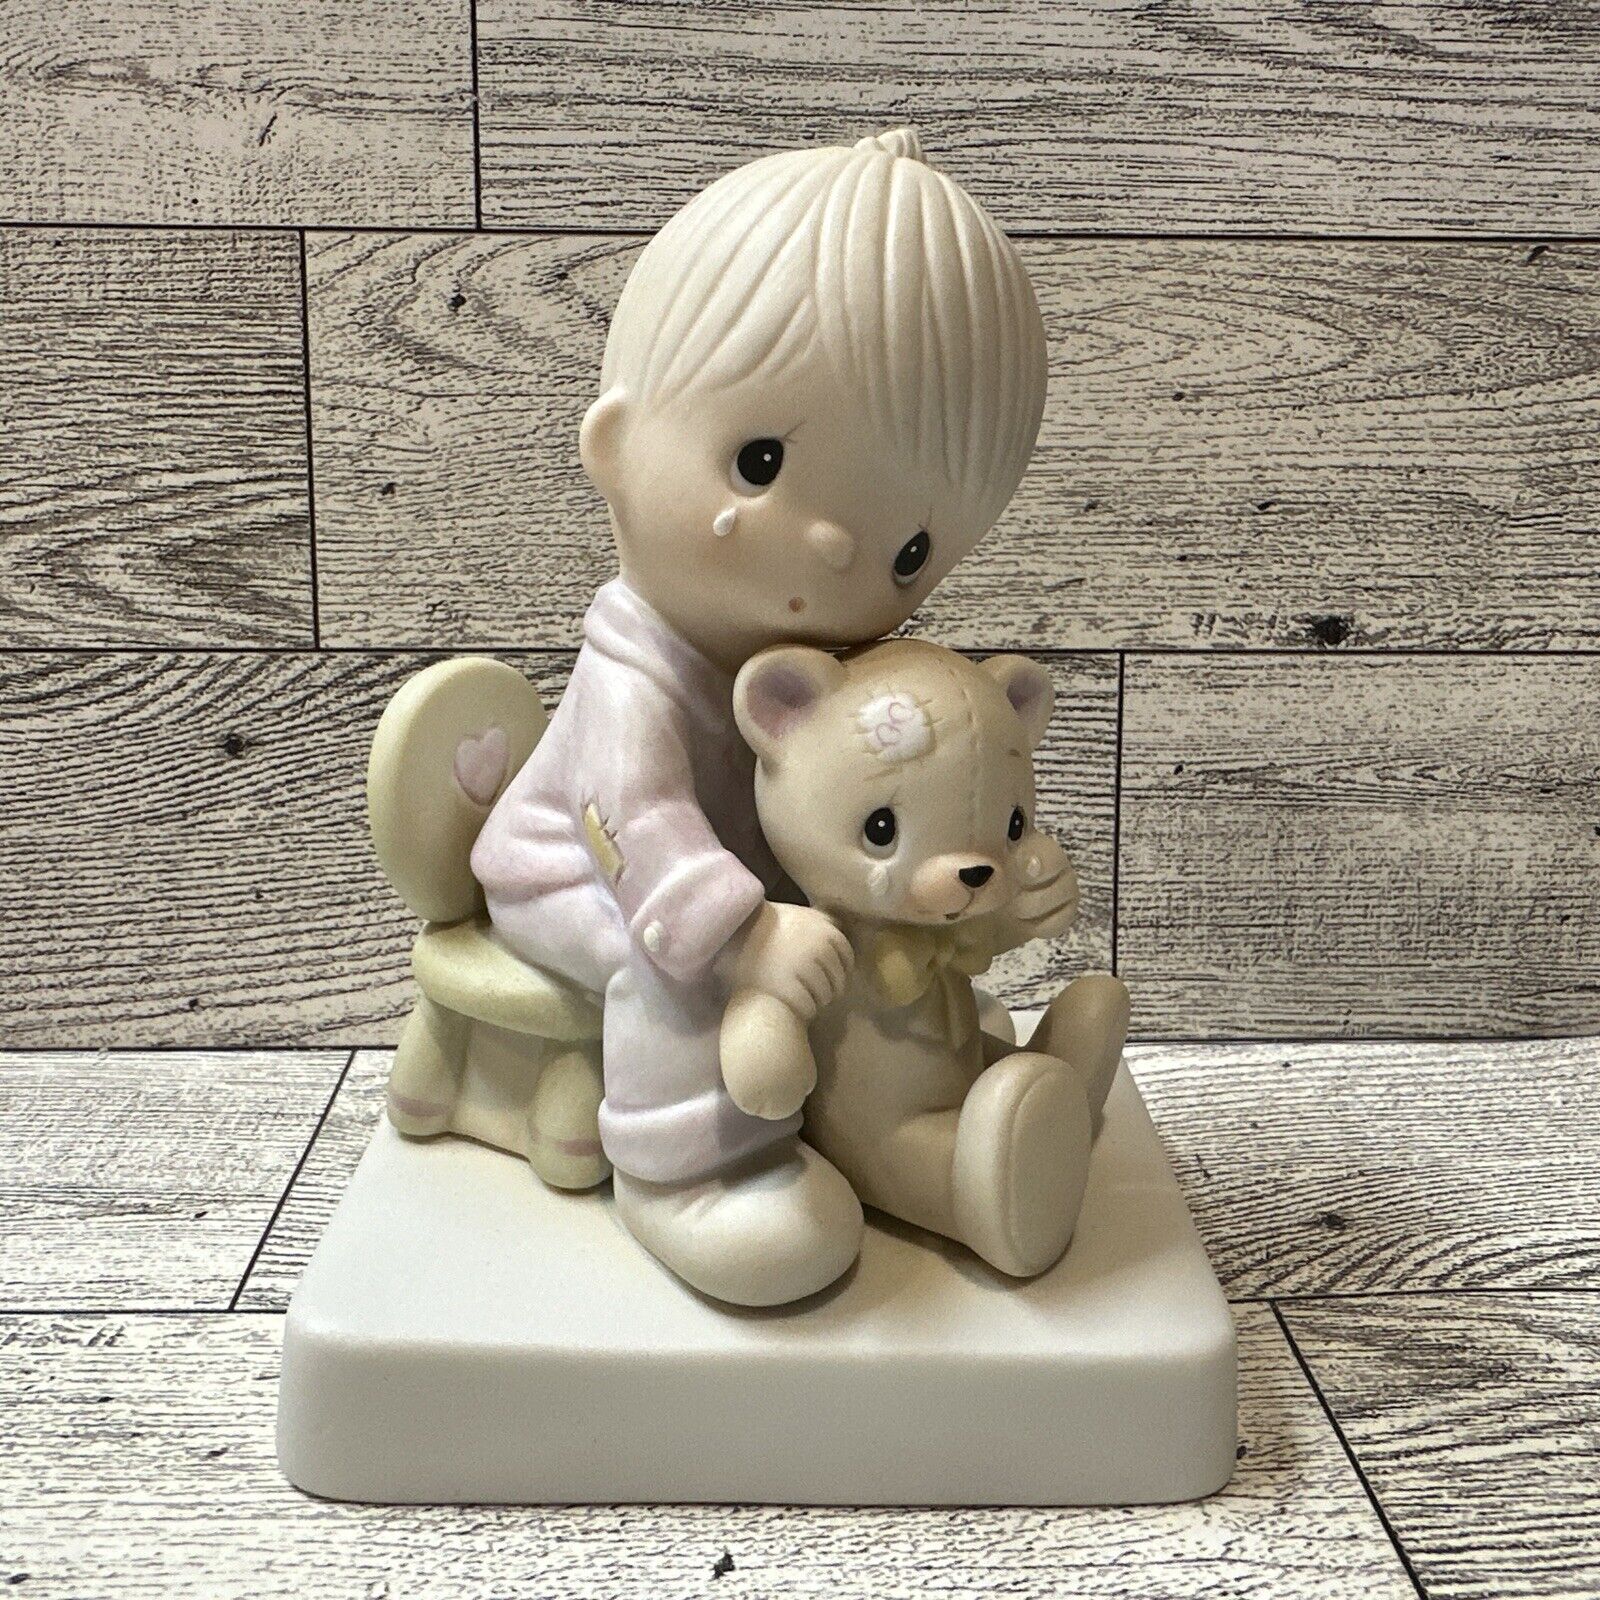 ENESCO Harry & David 5” Figurine Bear Ye One Another's Burdens 1980 Vintage